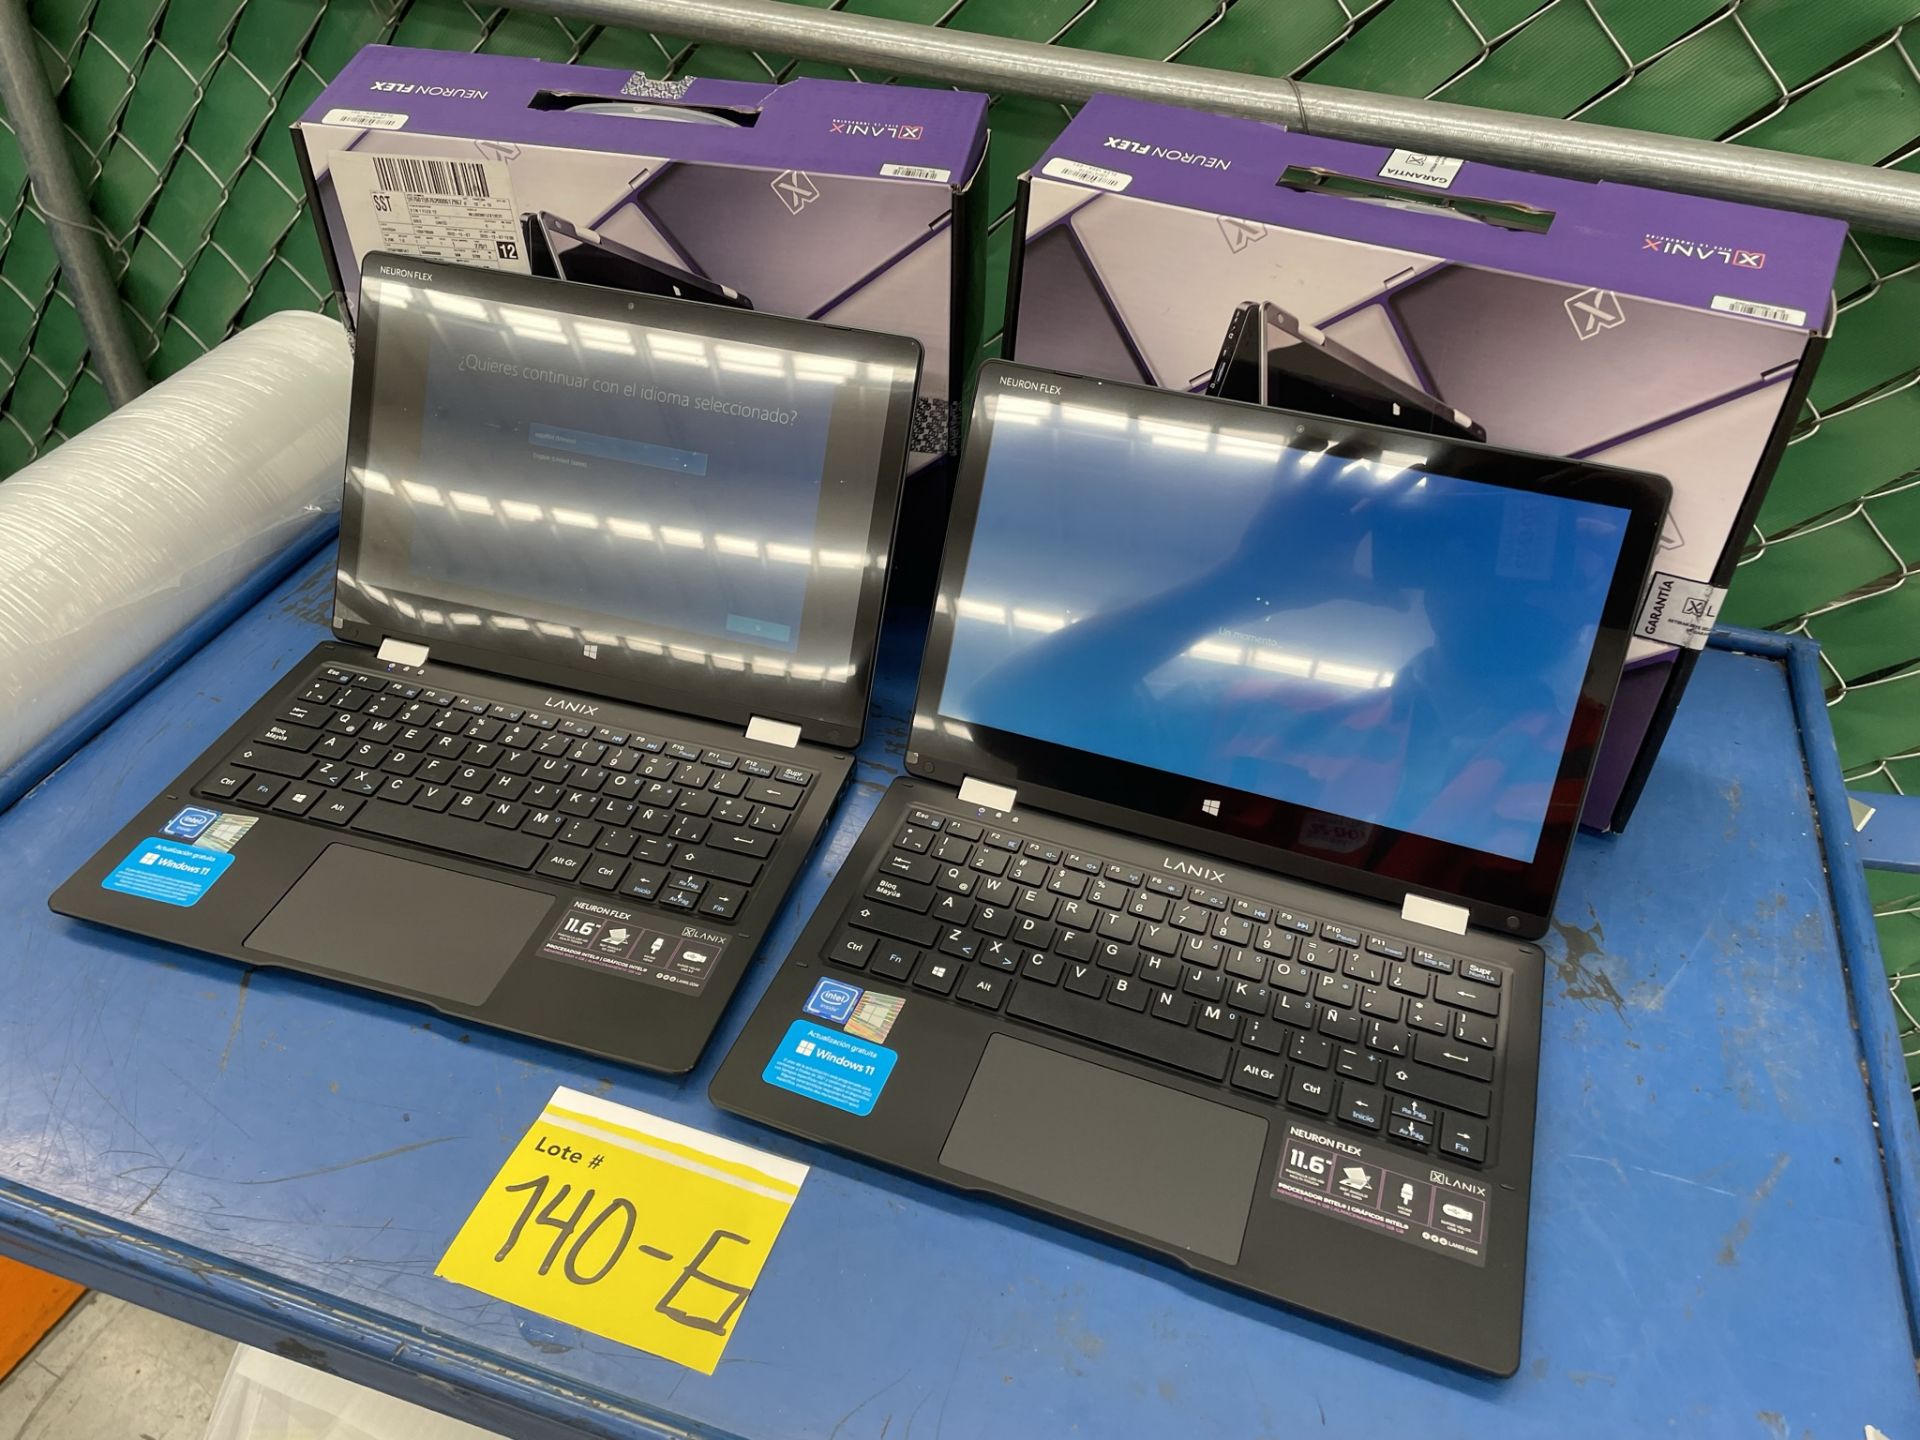 (EQUIPO NUEVO) Lote De 2 Laptops Contiene: 1 Laptop Marca LANIX, Modelo NEURON FLEX, Serie N/D, Col - Image 3 of 9